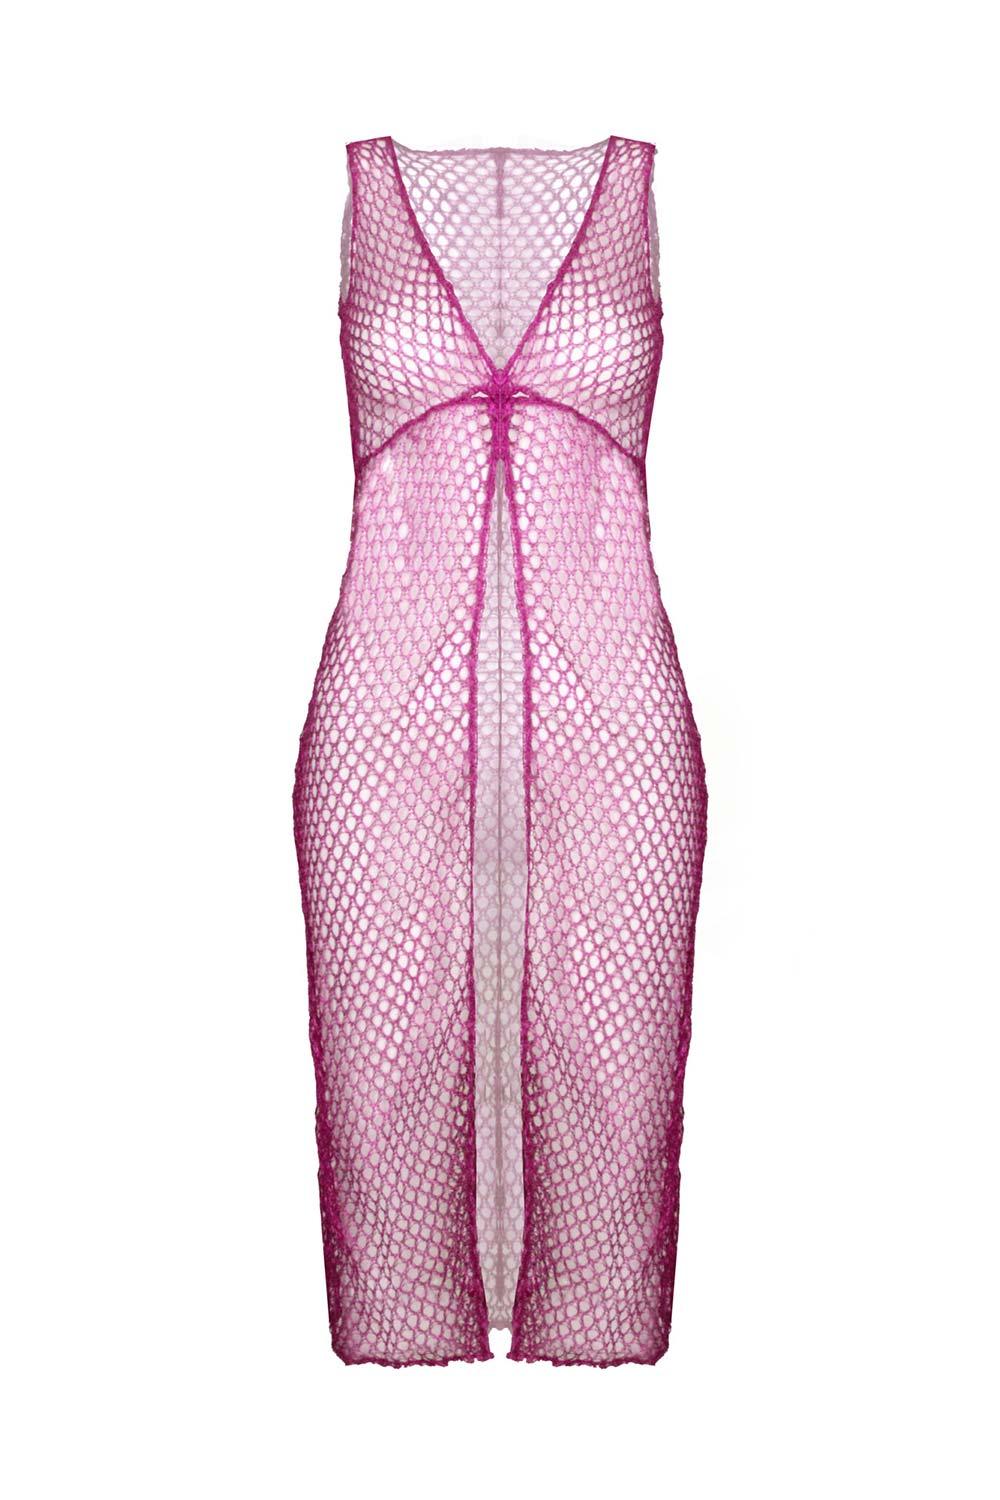 Selia Richwood | Pink Mesh Beach Dress | Milagron